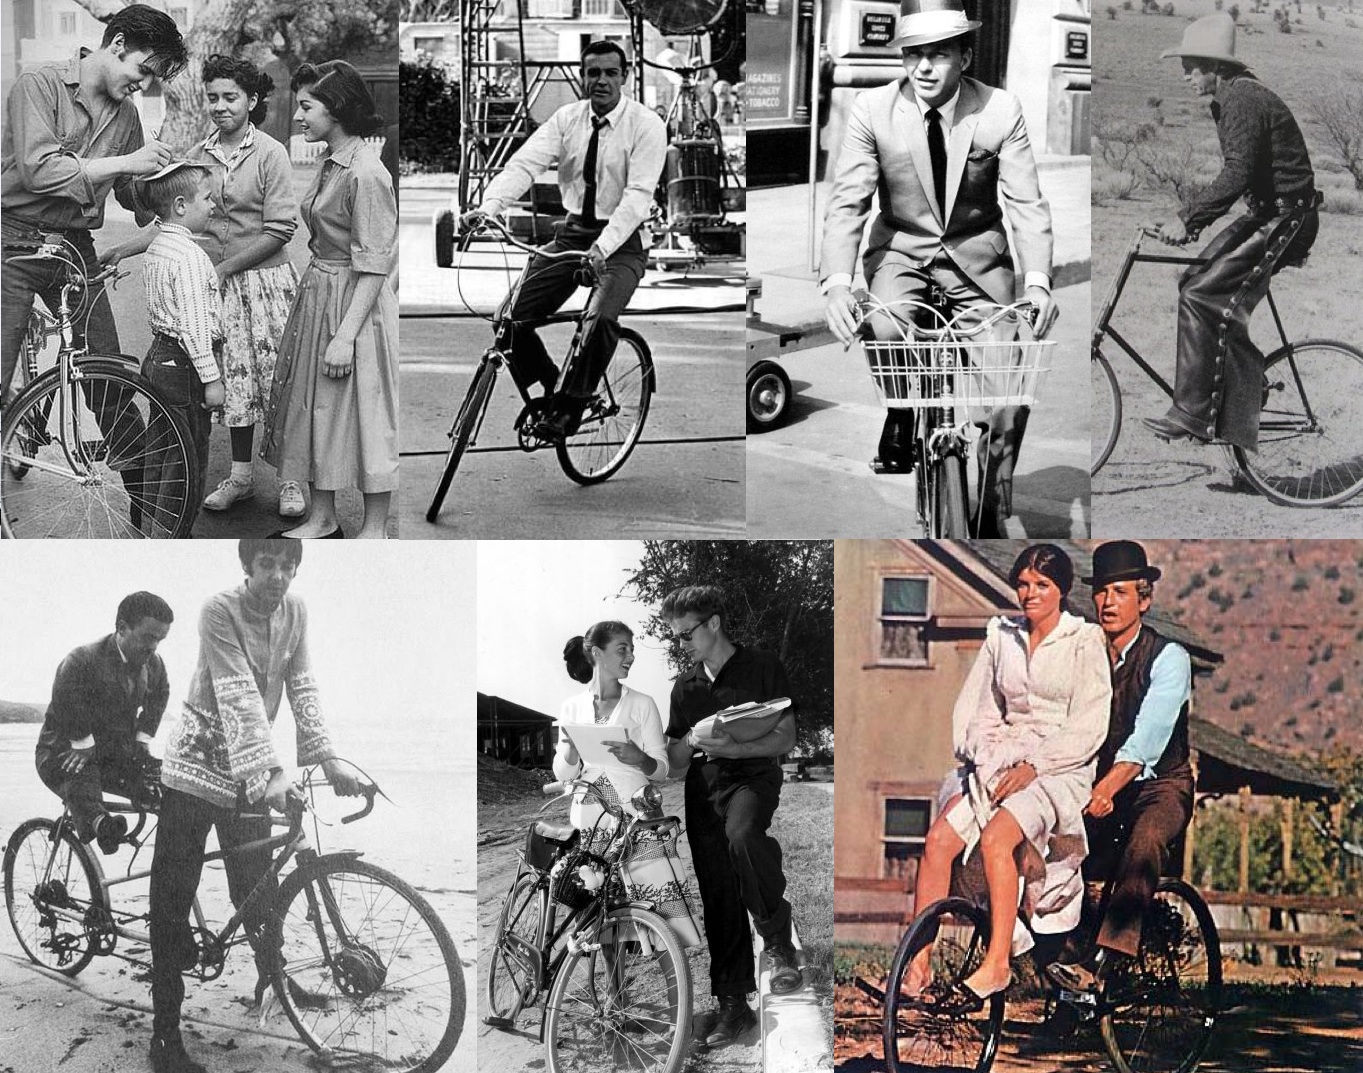 http://4.bp.blogspot.com/-COvAkEaCK0E/Tc28_9IGzoI/AAAAAAAACok/lZm1265wHNU/s1600/Vintage+dudes+bicycles.jpg